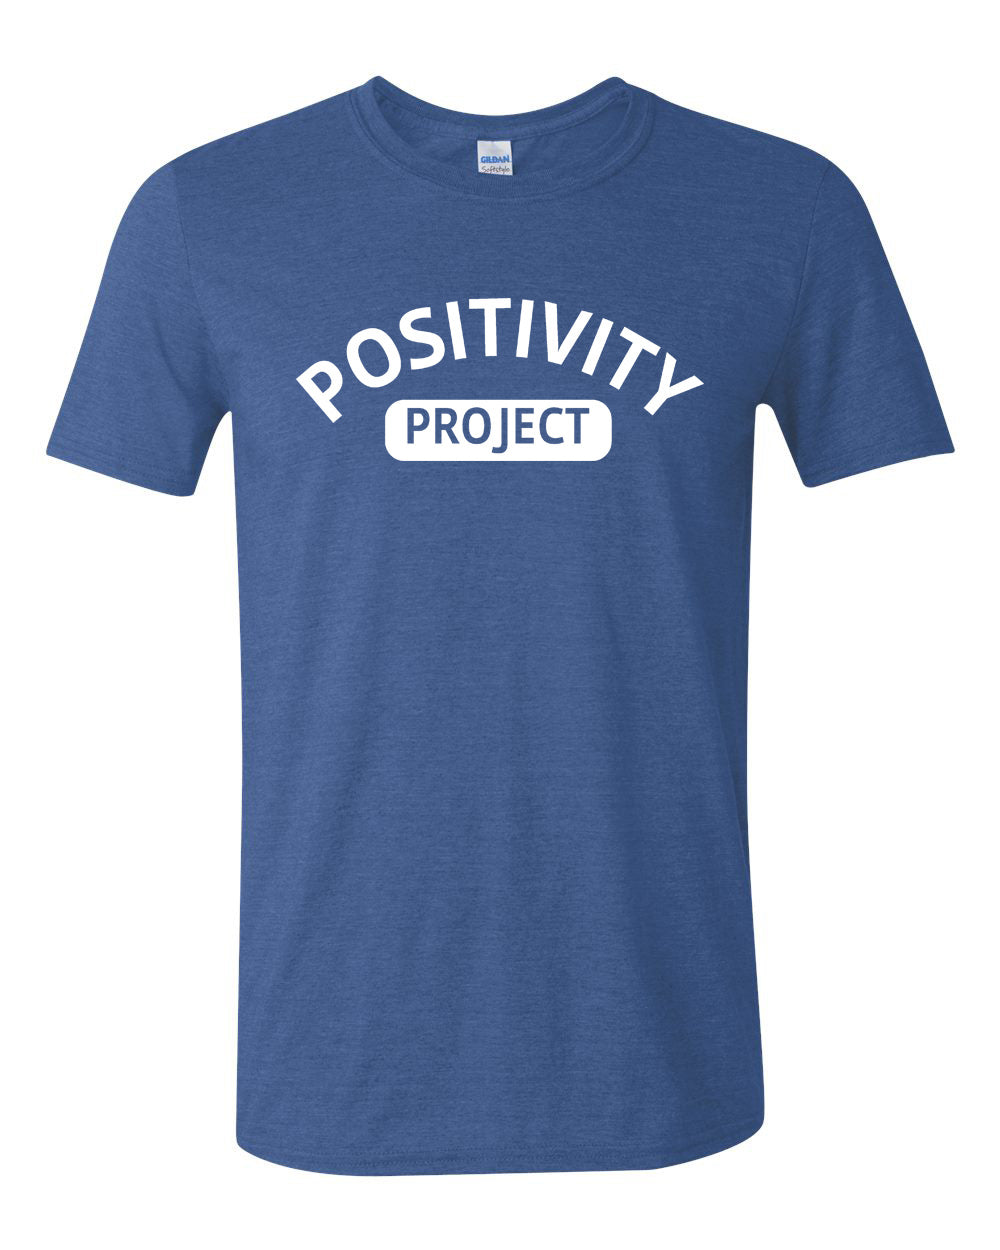 Positivity Project Tee